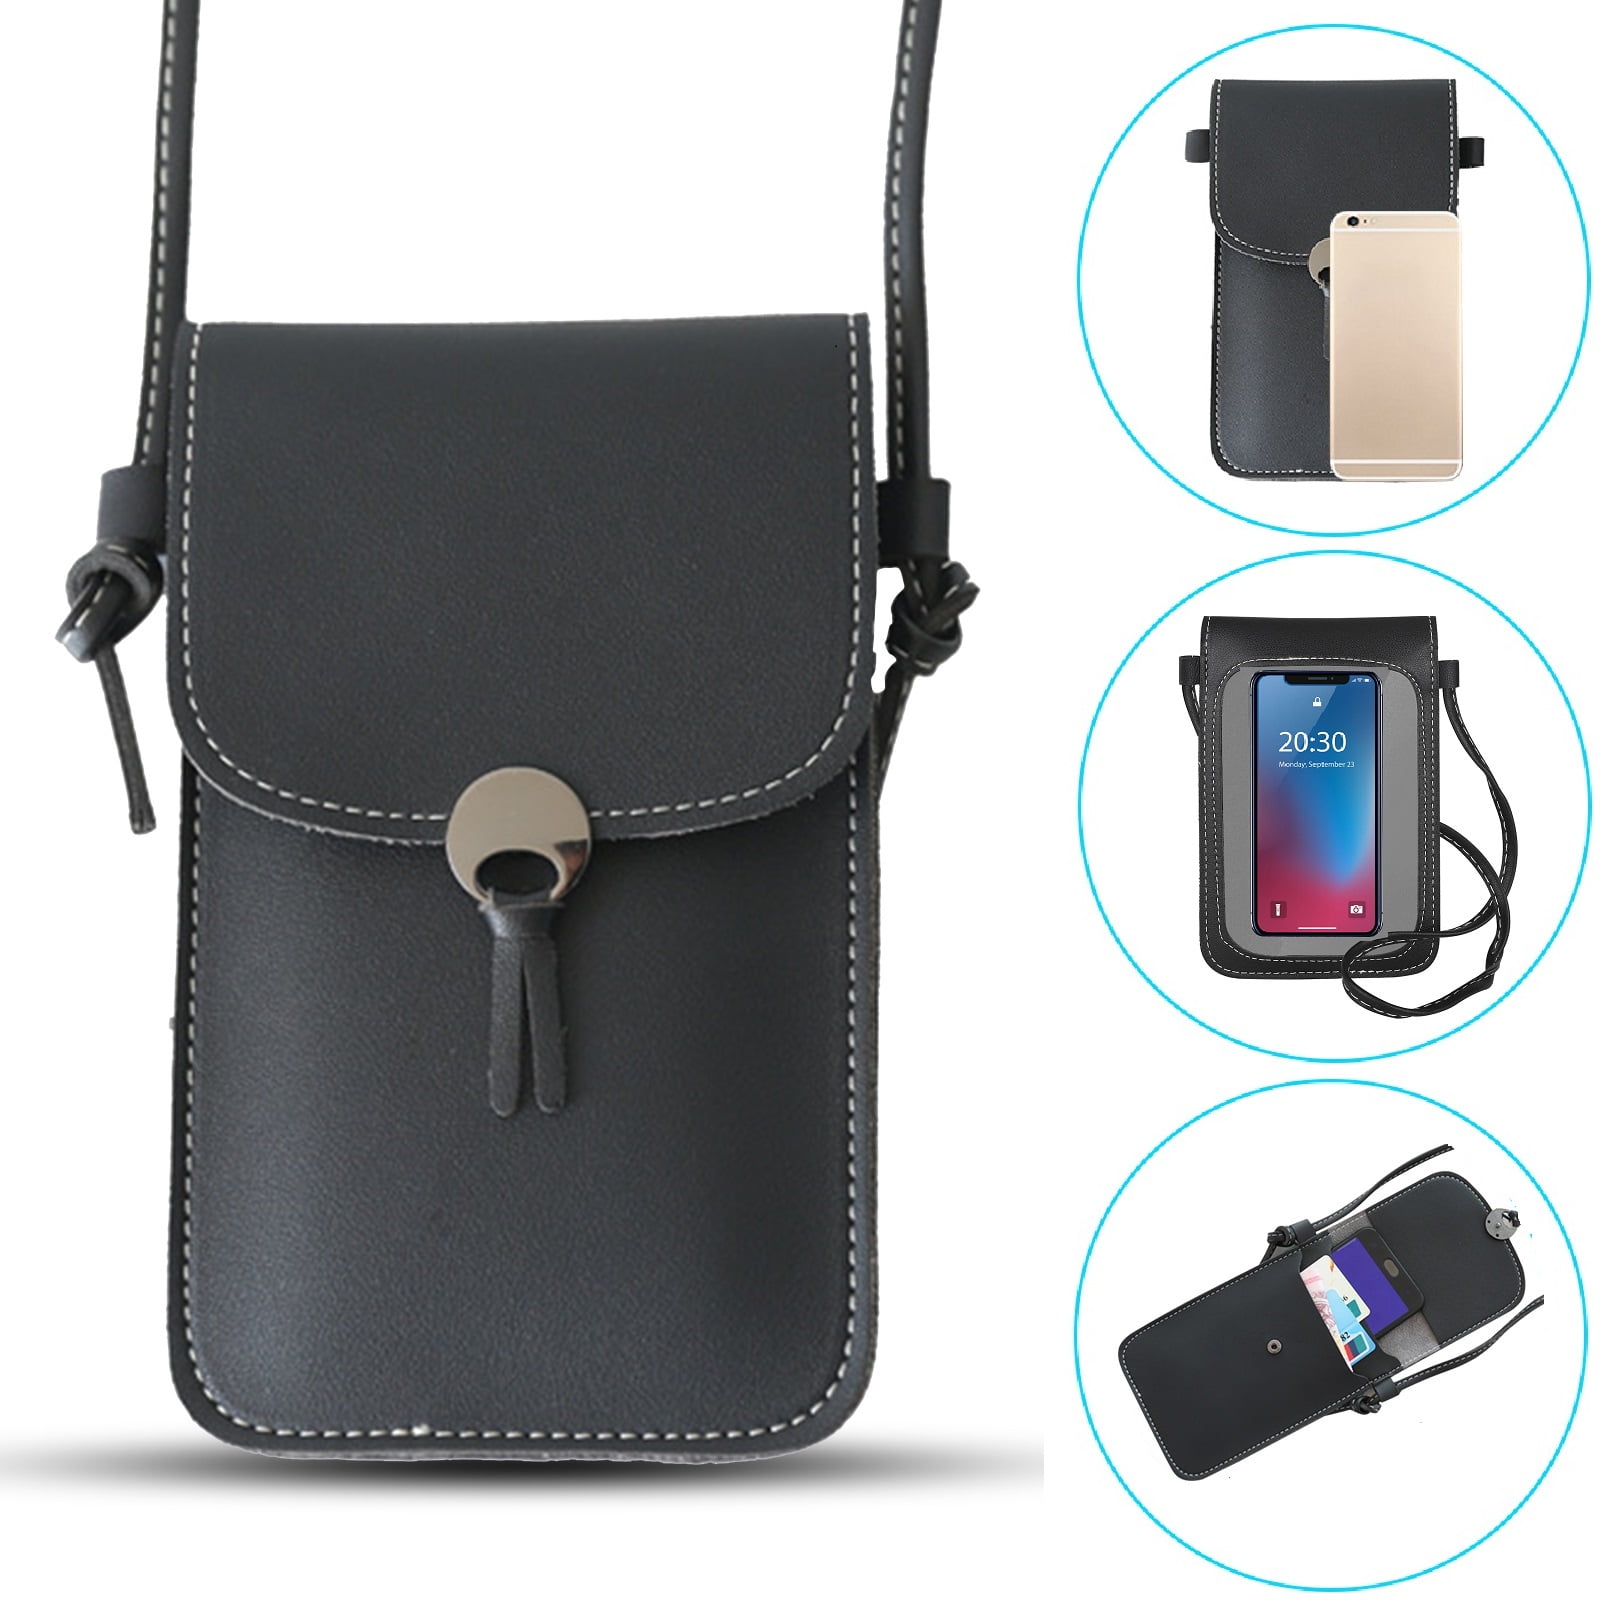 Small Women Cross-body Cell Phone Bag Shoulder Case Wallet Purse Handbag Pouch 